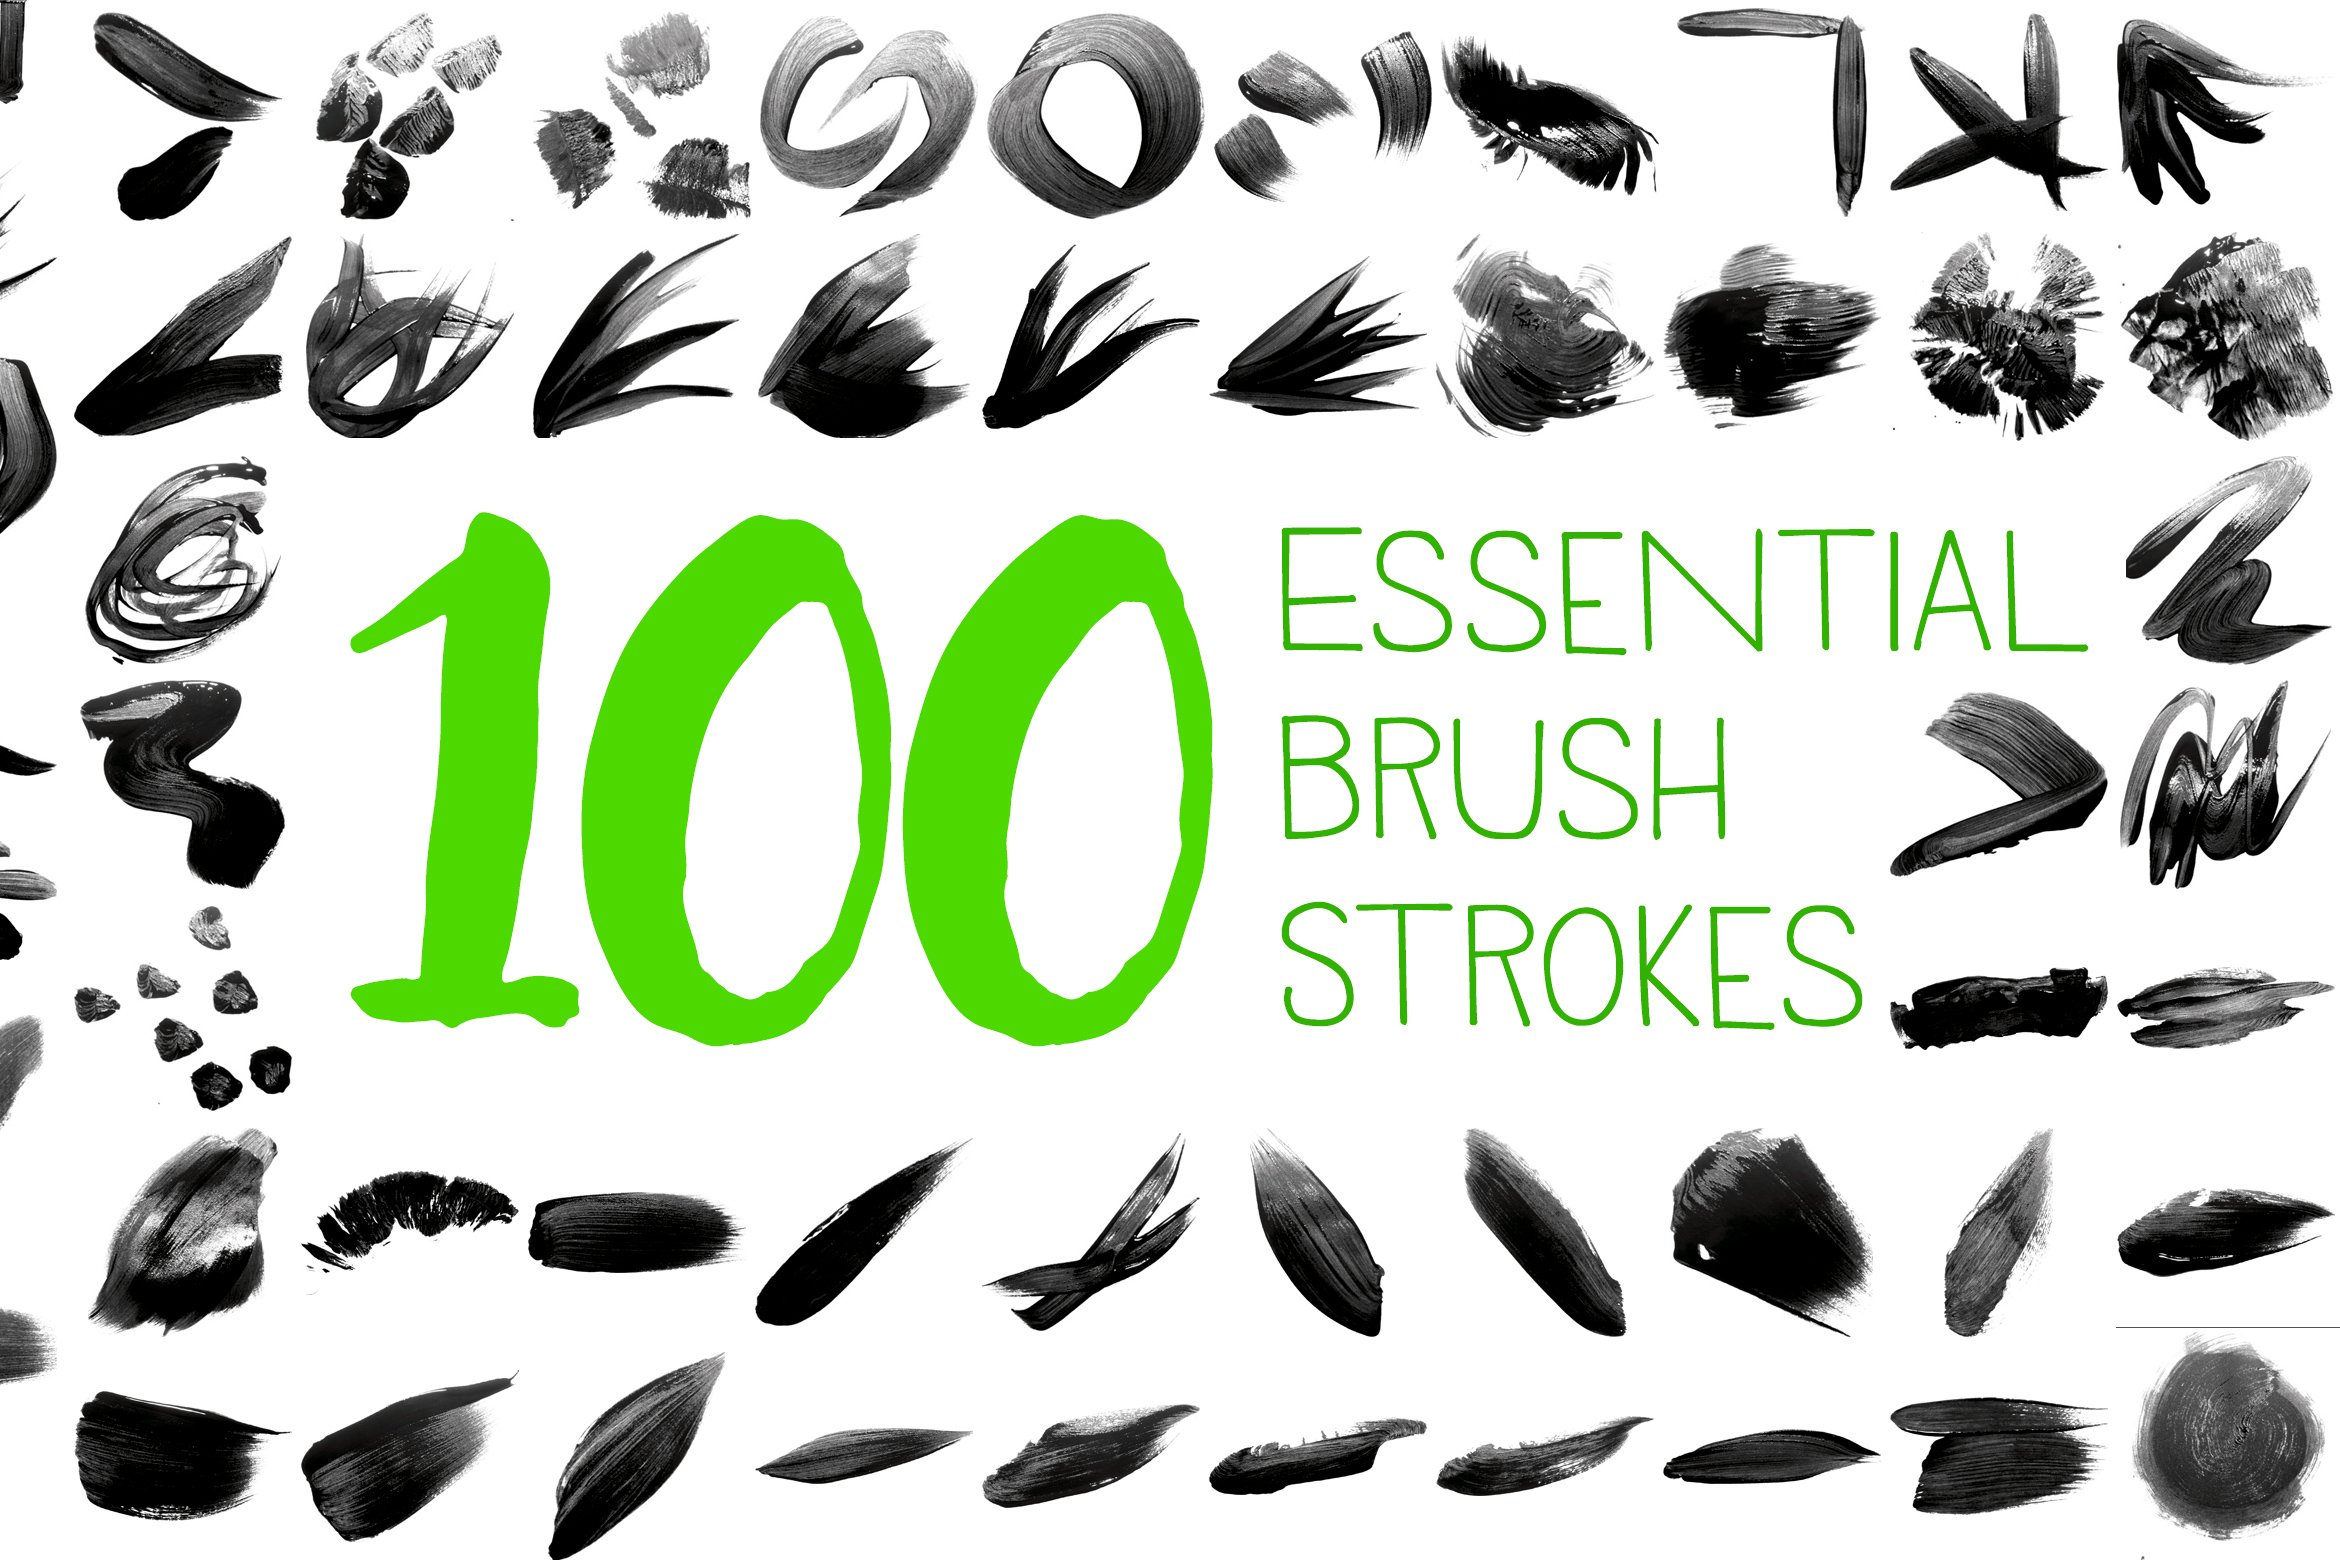 100 Essential Brush Strokescover image.